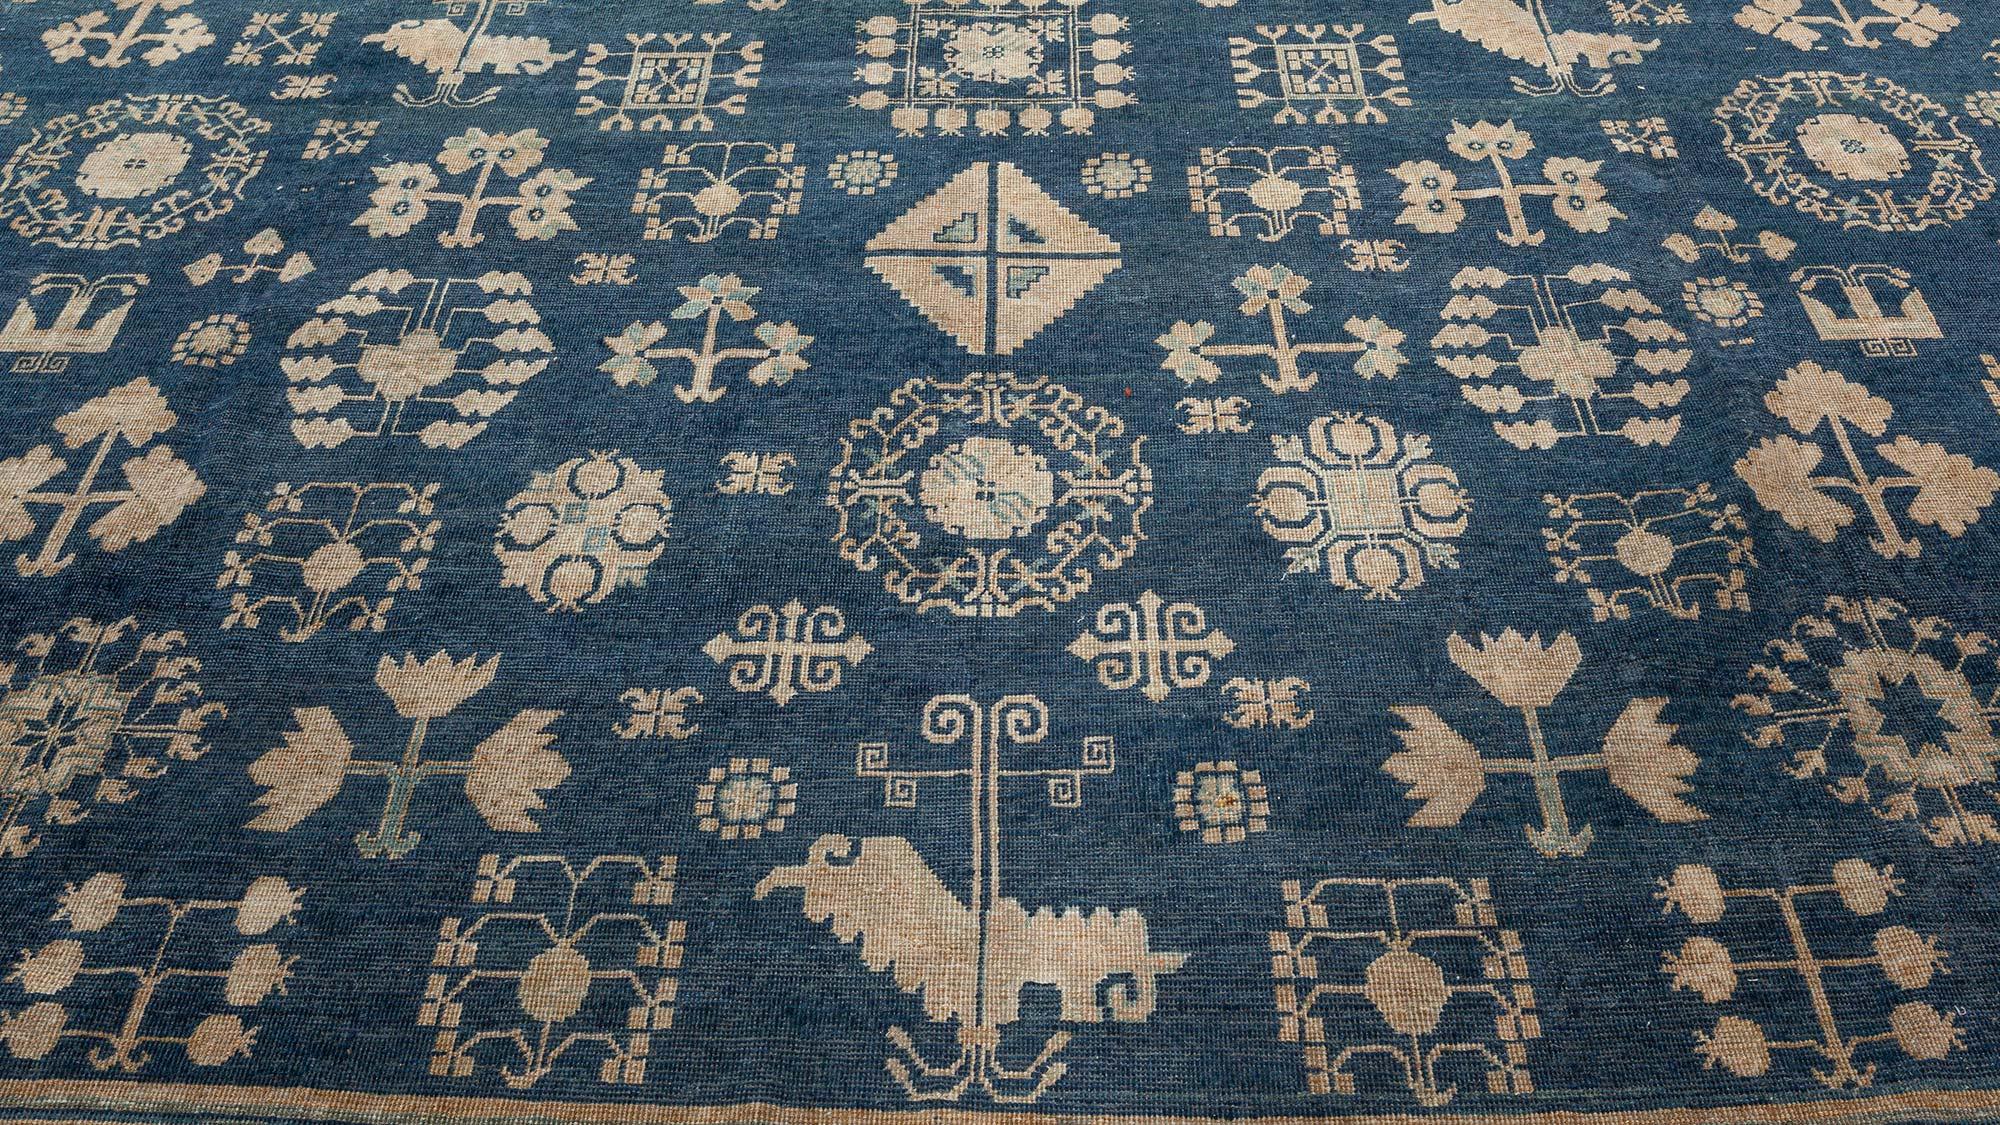 Authentic 19th Century Yarkand handmade wool rug
Size: 11'1